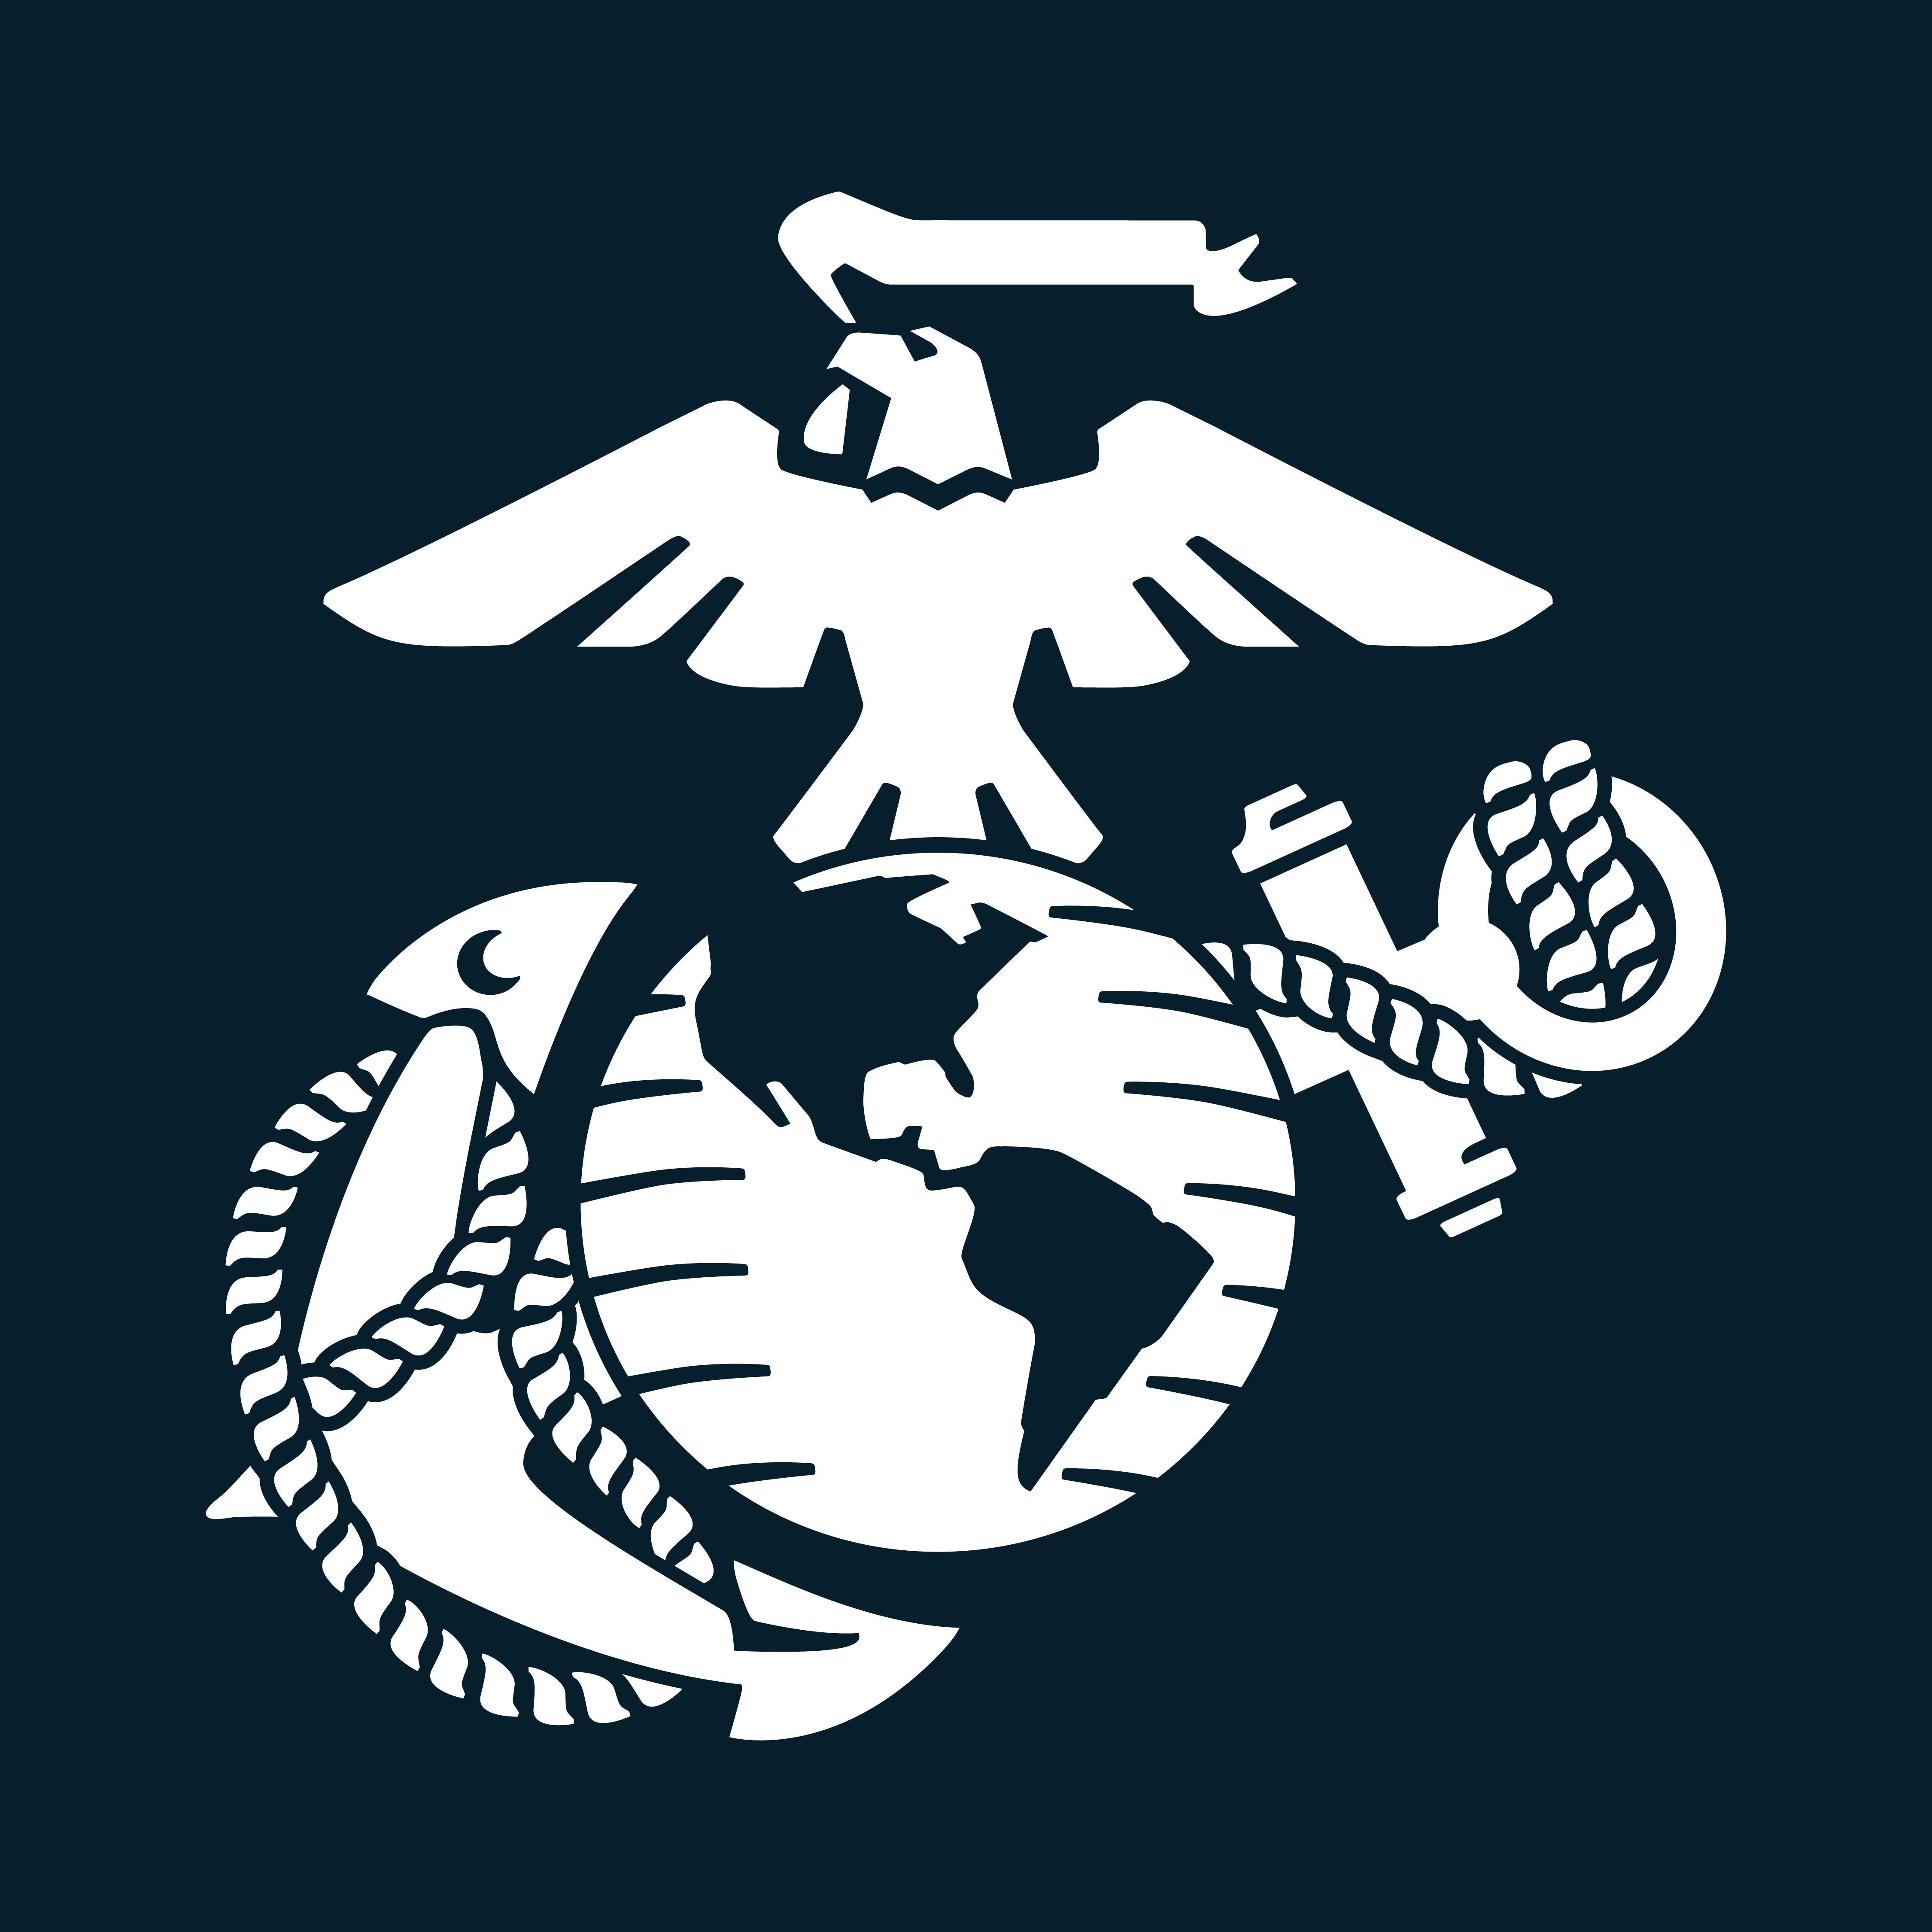 US Marine Corps RSS HOBBS